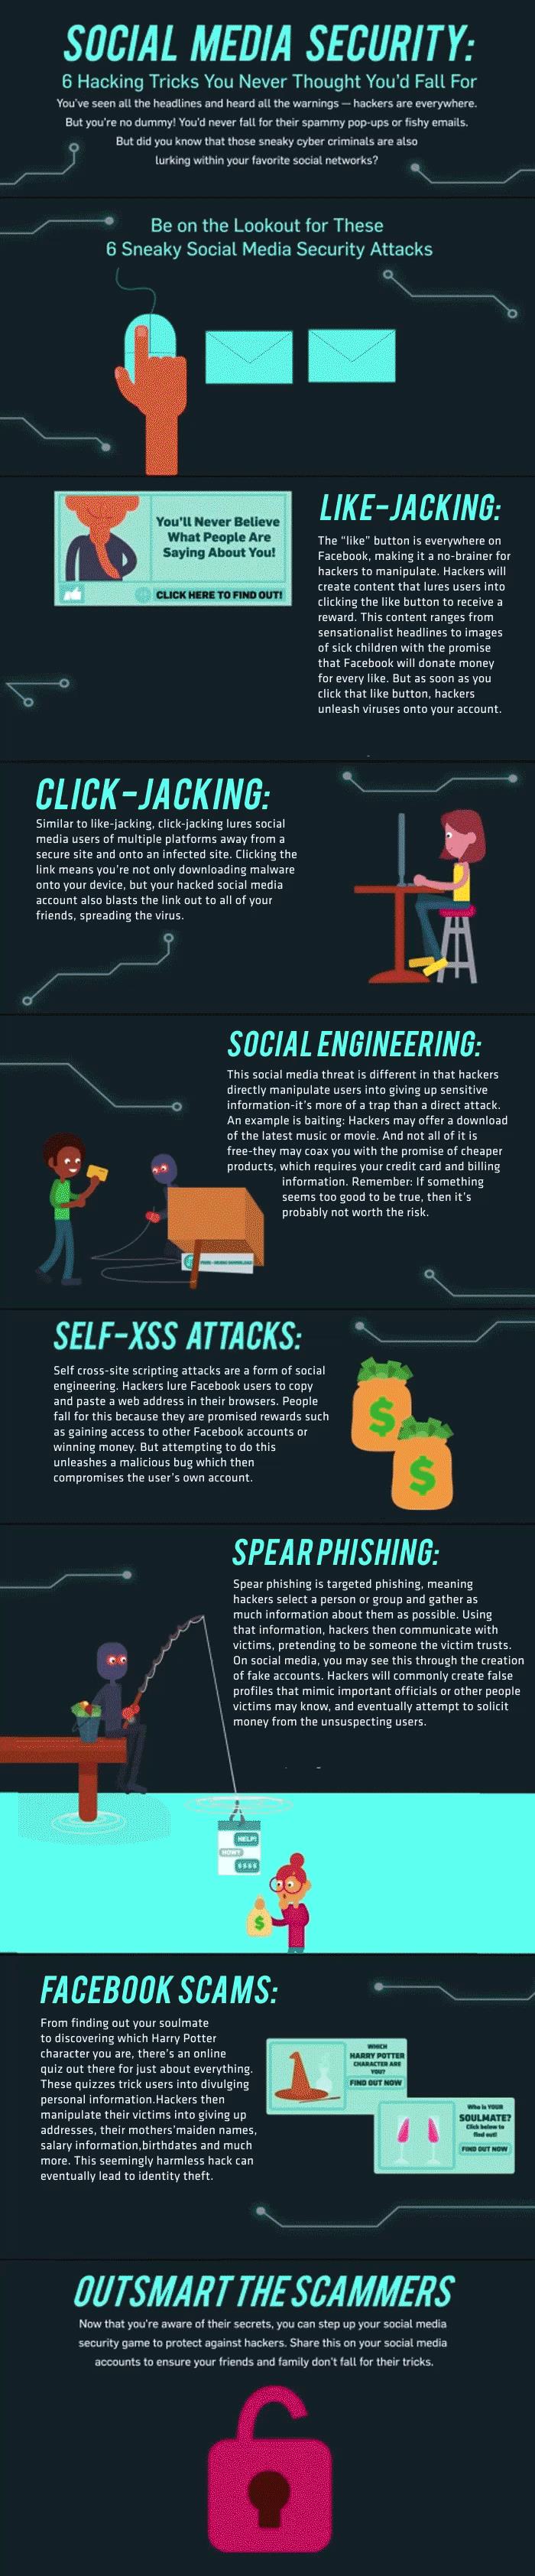 social media security infographic, described in detail below.